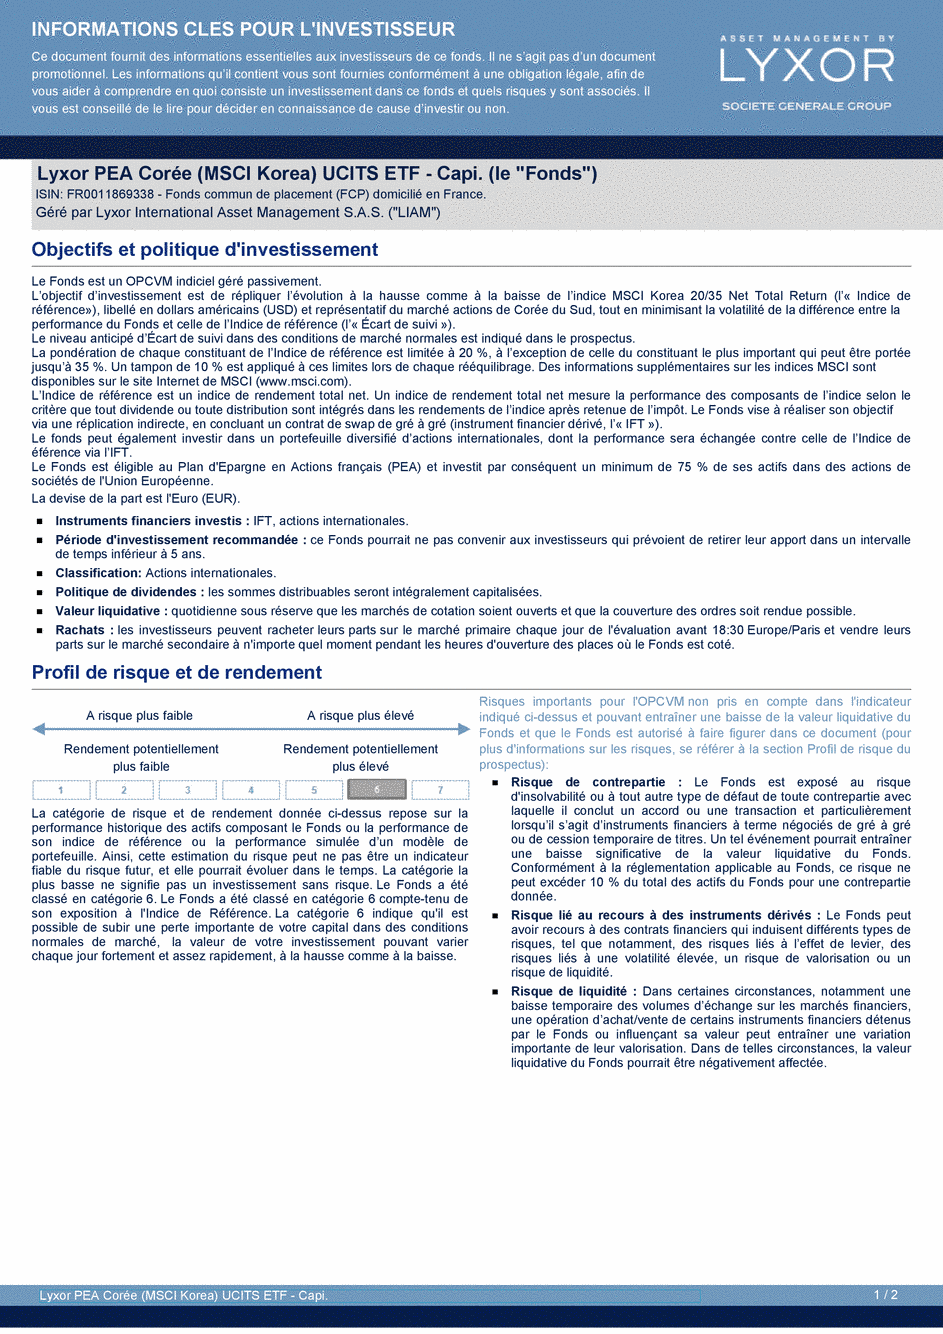 DICI Lyxor PEA Corée (MSCI Korea) UCITS ETF - Capi. - 19/02/2021 - Français